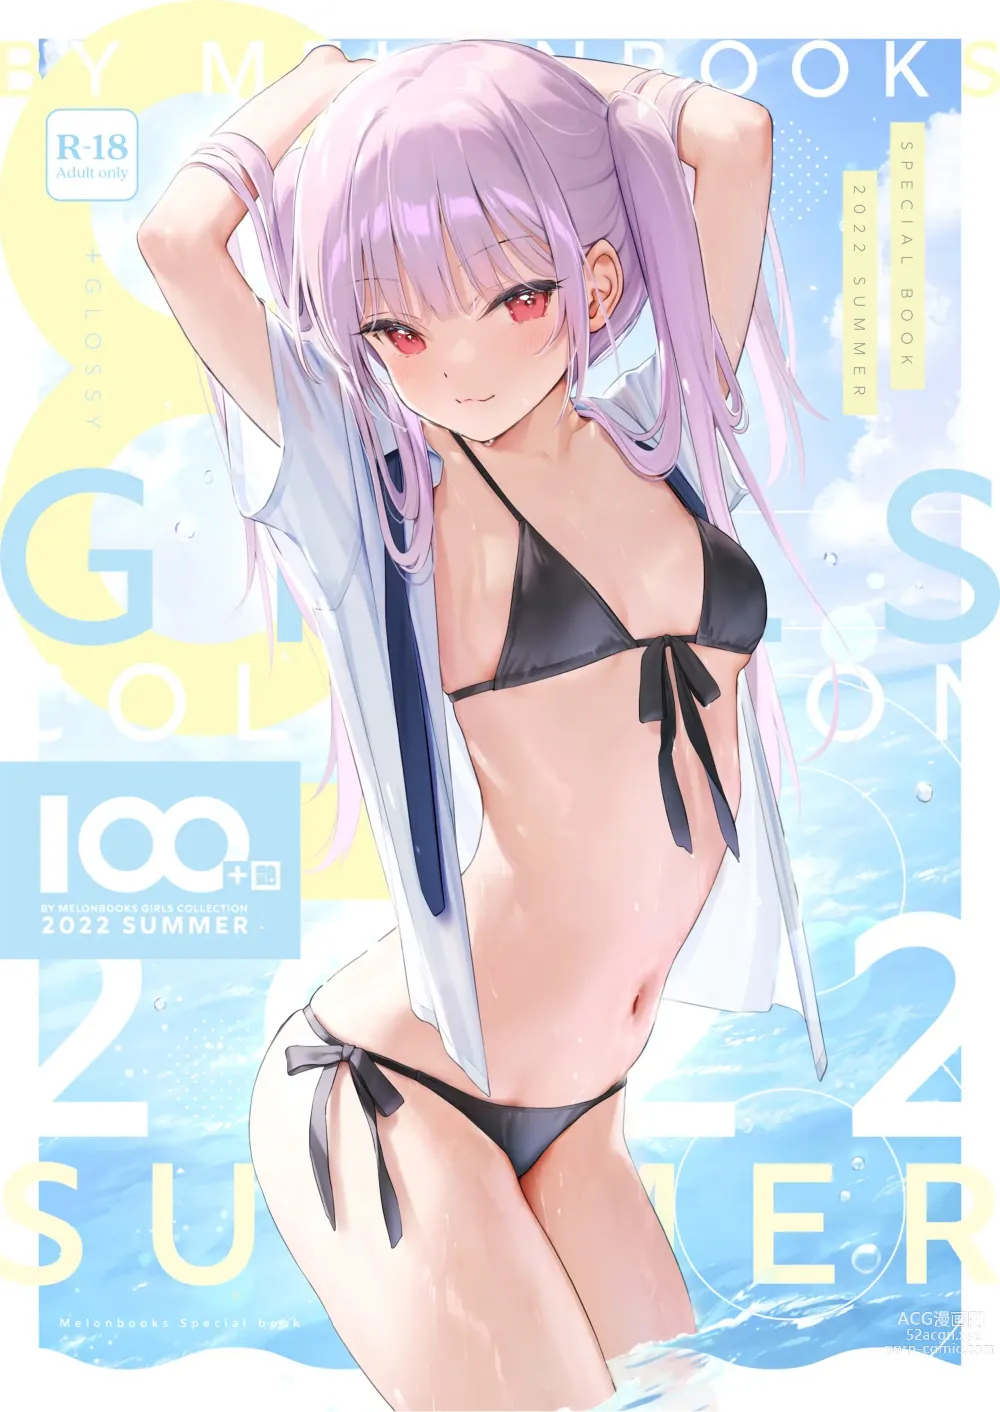 Page 1 of manga 100+ Tsuya by Melonbooks Girls Collection 2022 SUMMER